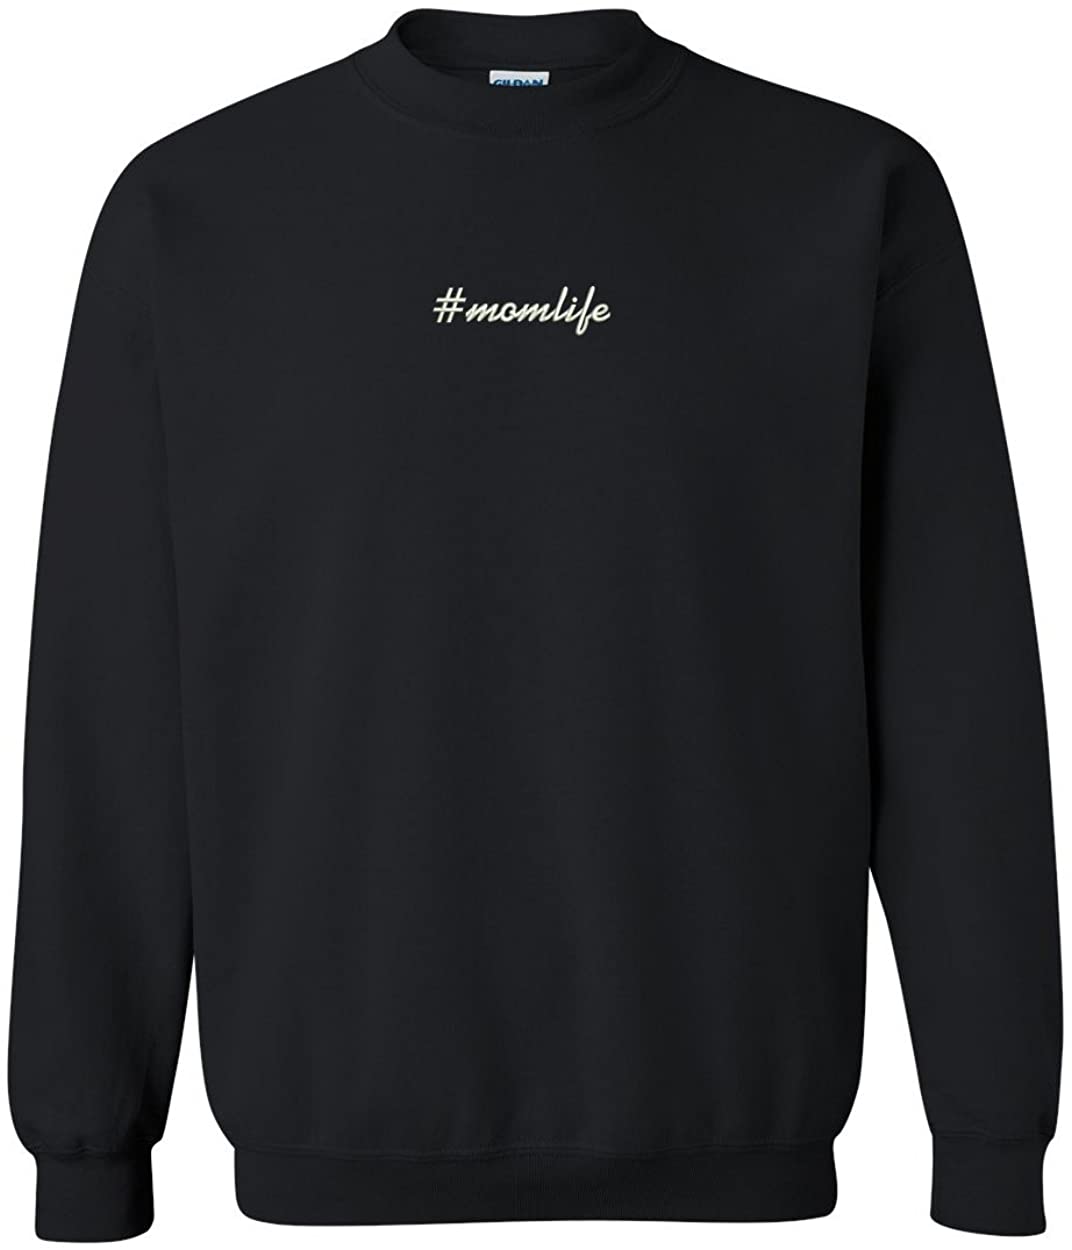 Trendy Apparel Shop Hashtag #Momlife Embroidered Crewneck Sweatshirt